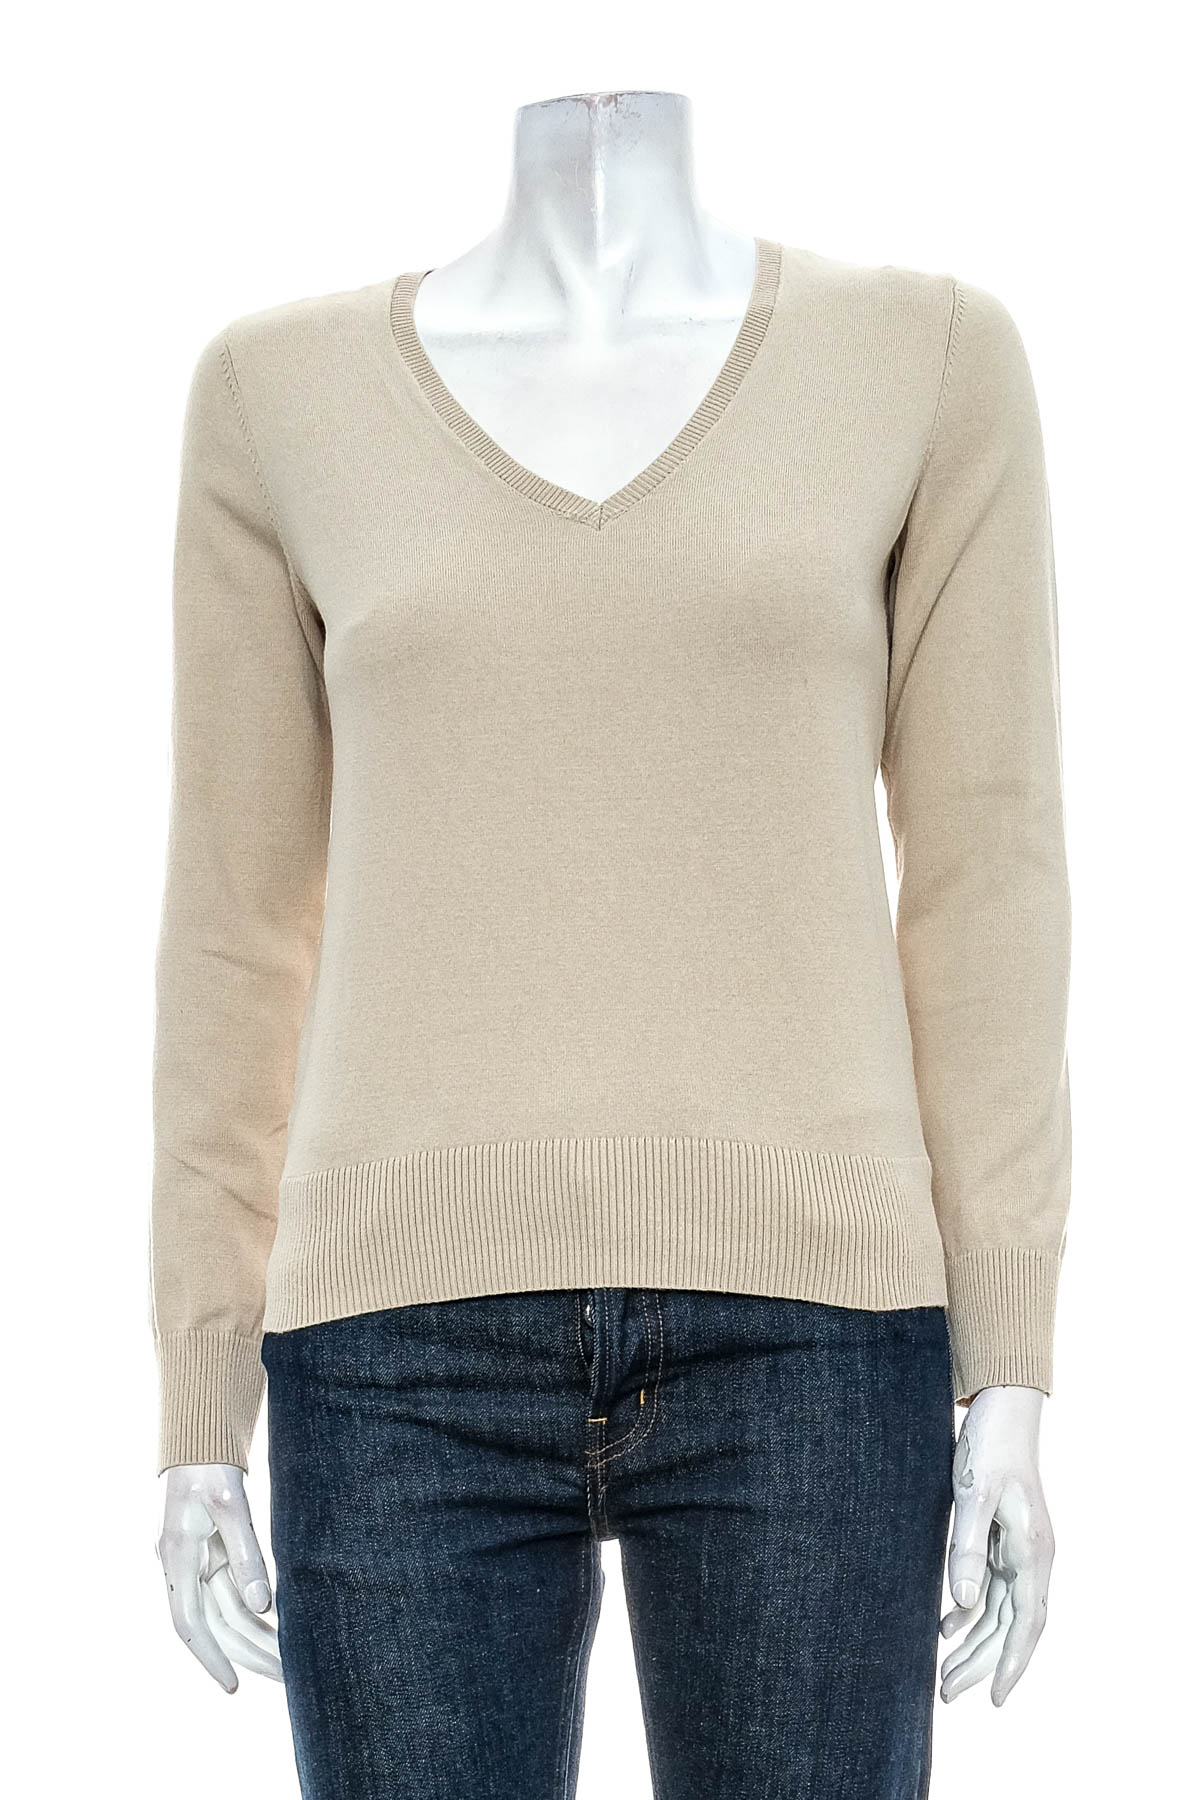 Women's sweater - The Basics x C&A - 0